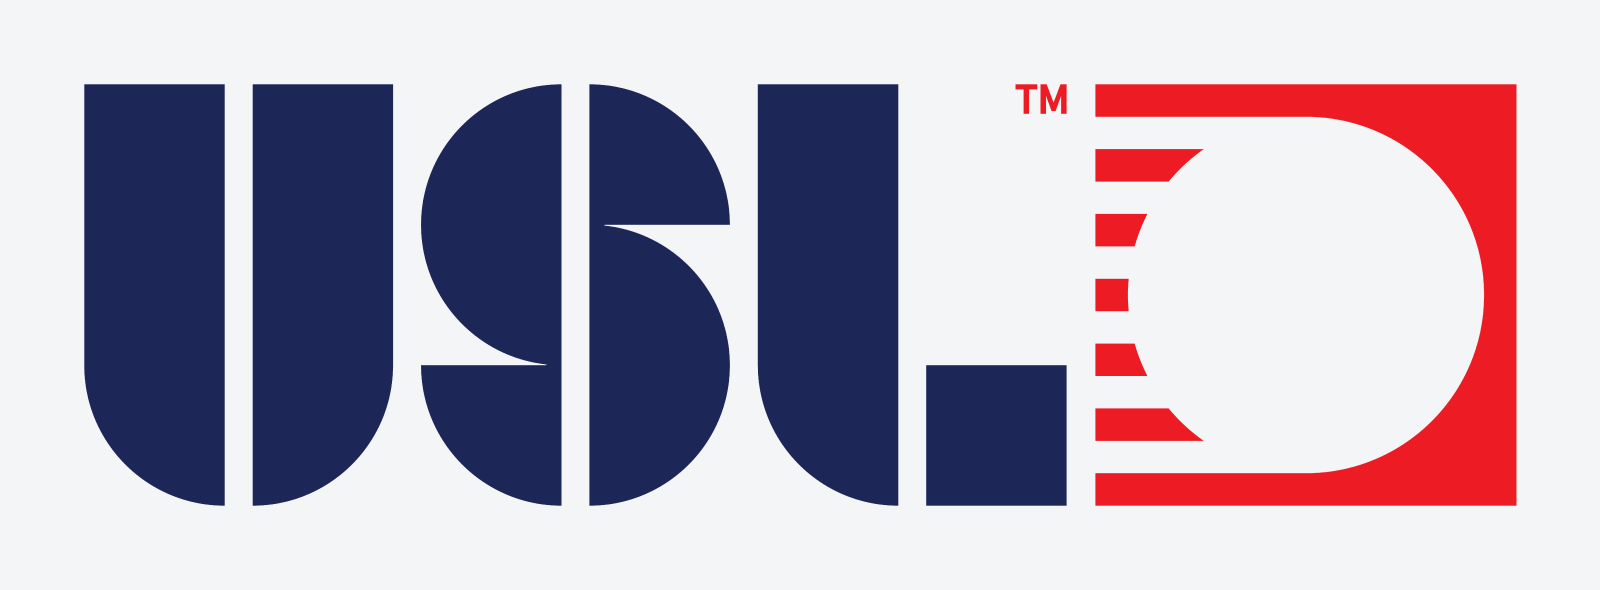 USL logo - Soccer Stadium Digest